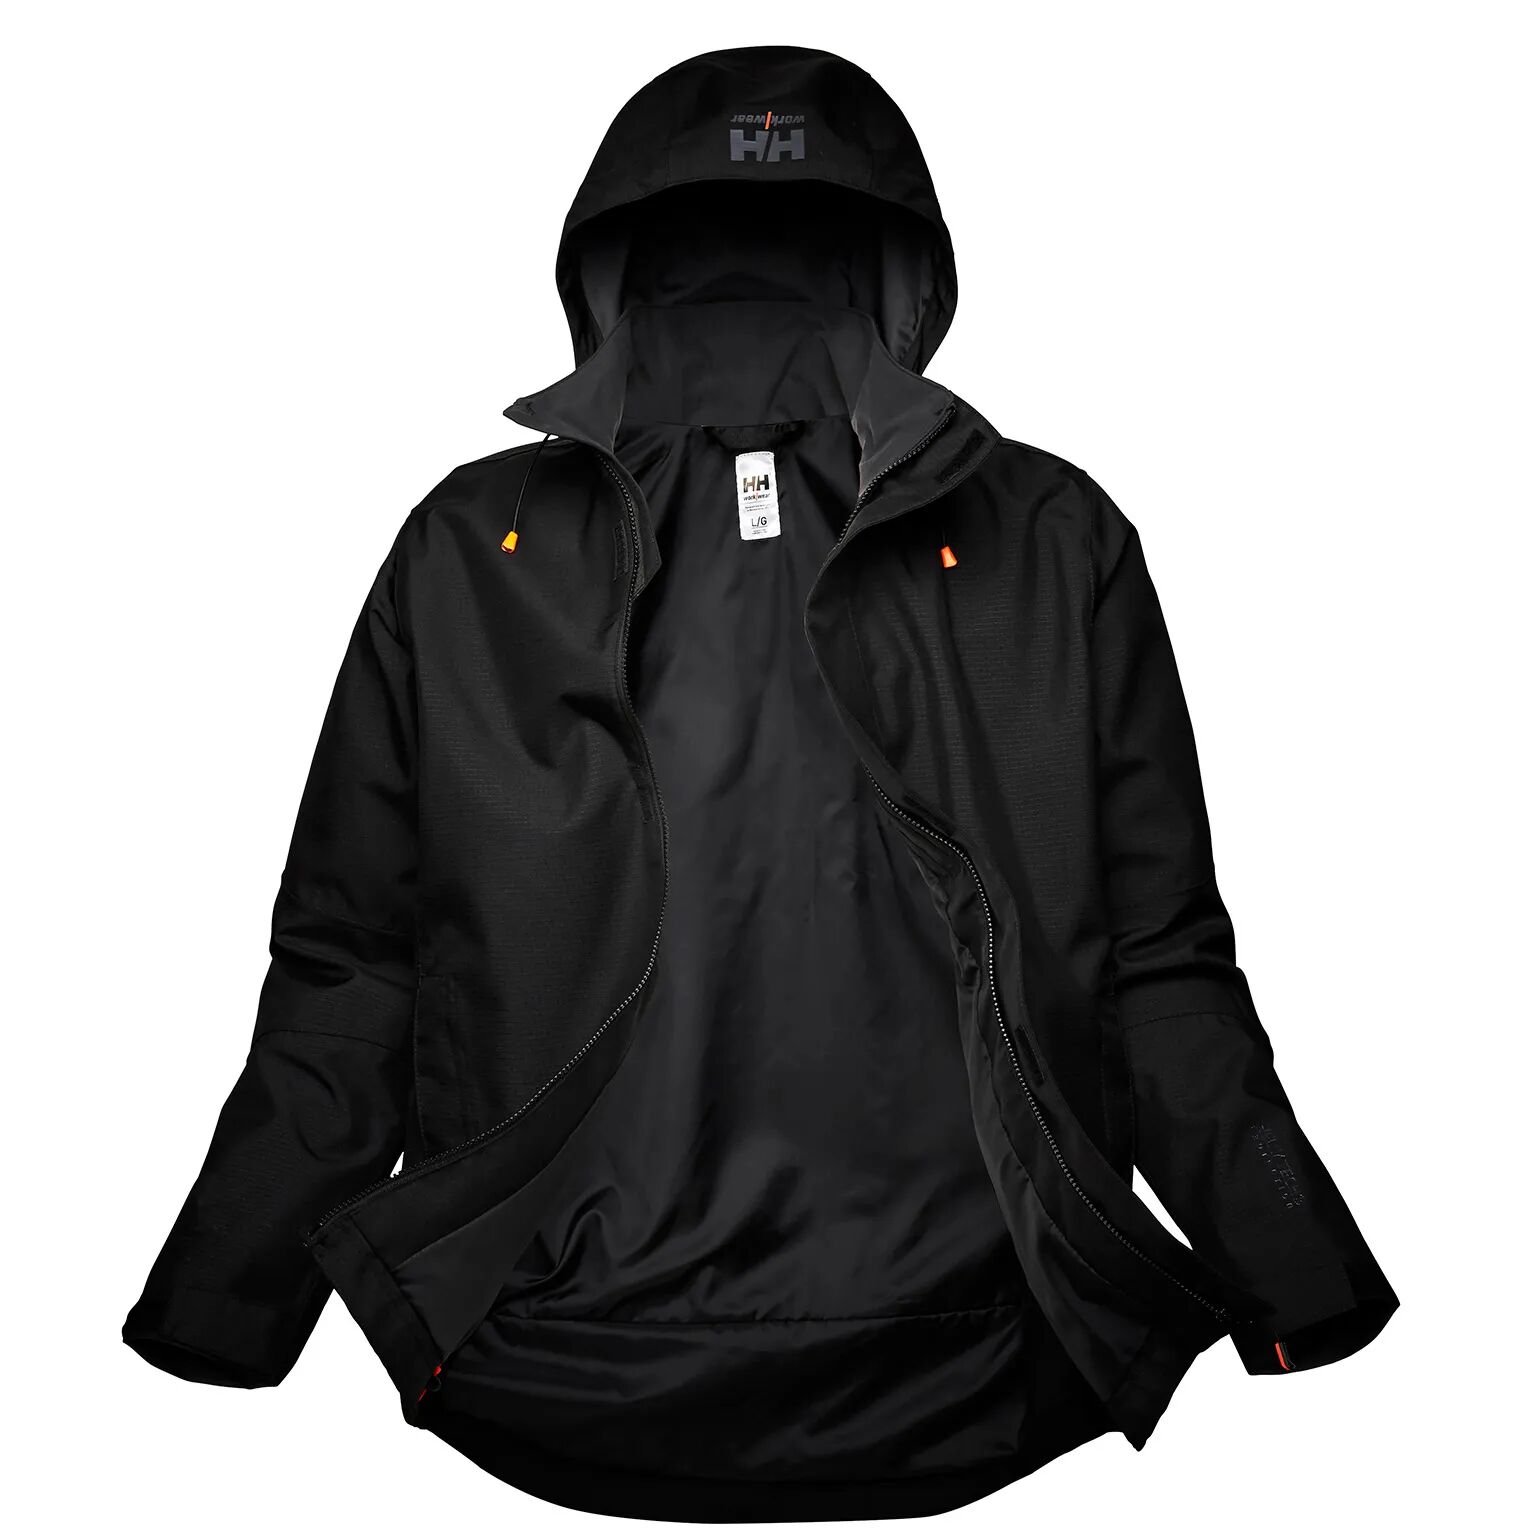 HH Workwear Helly Hansen WorkwearOxford Breathable Waterproof Shell Jacket Black S